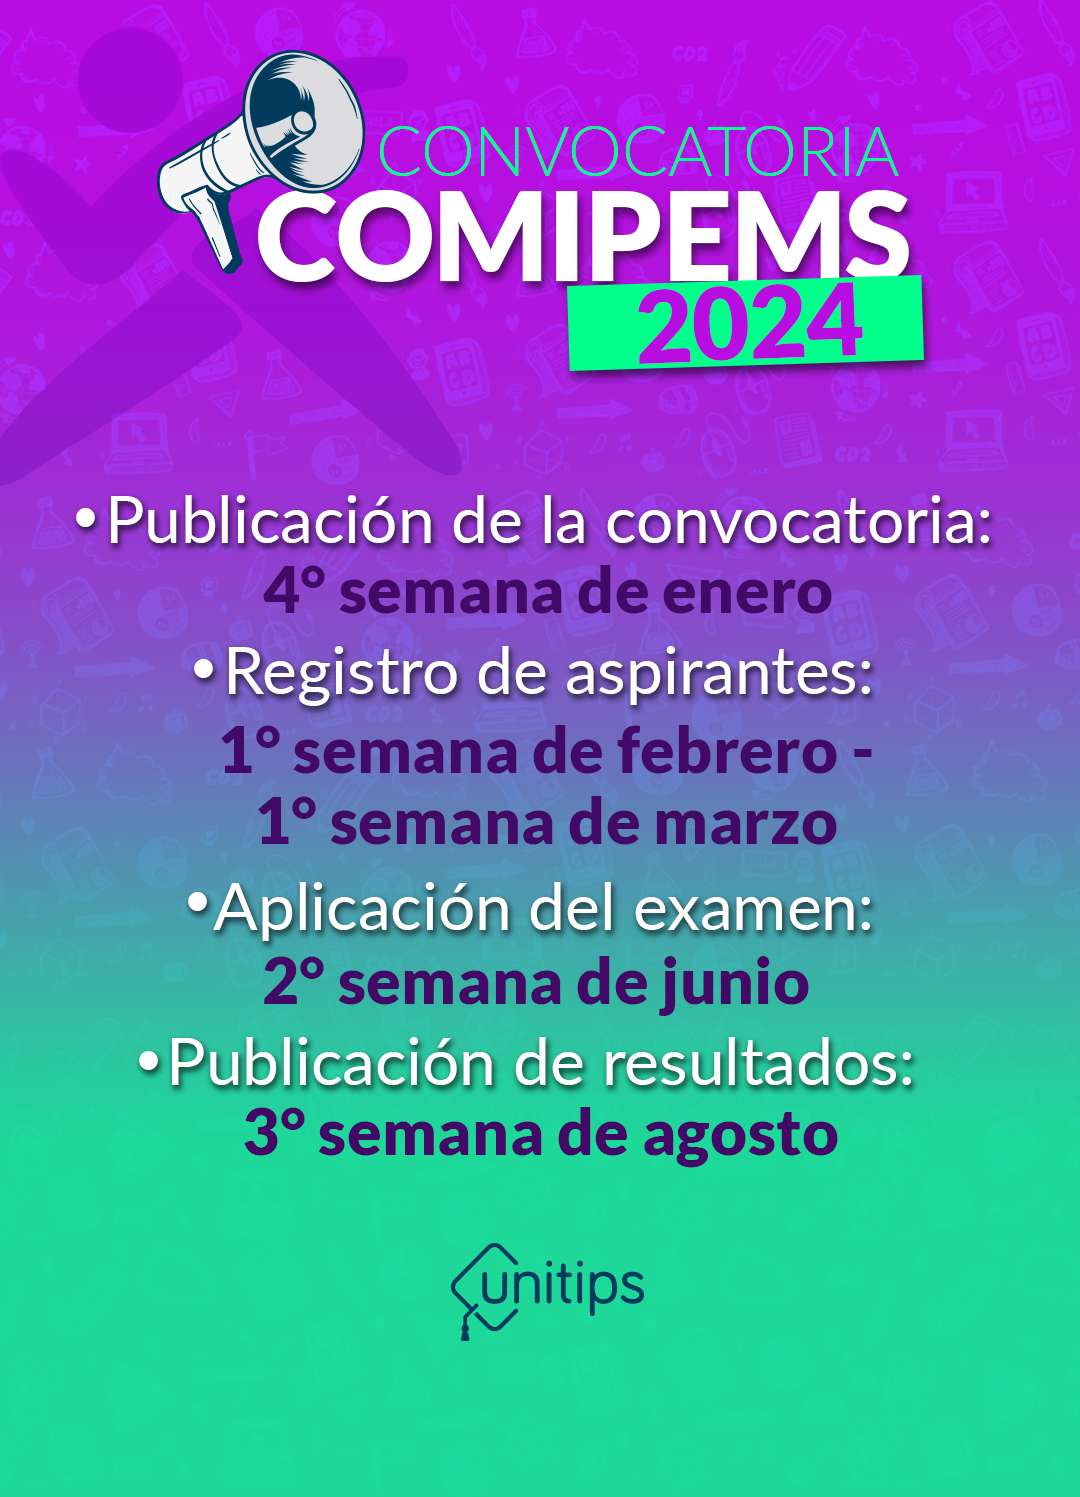 Imagen-interna-convocatoria-Comipems-2024-fechas